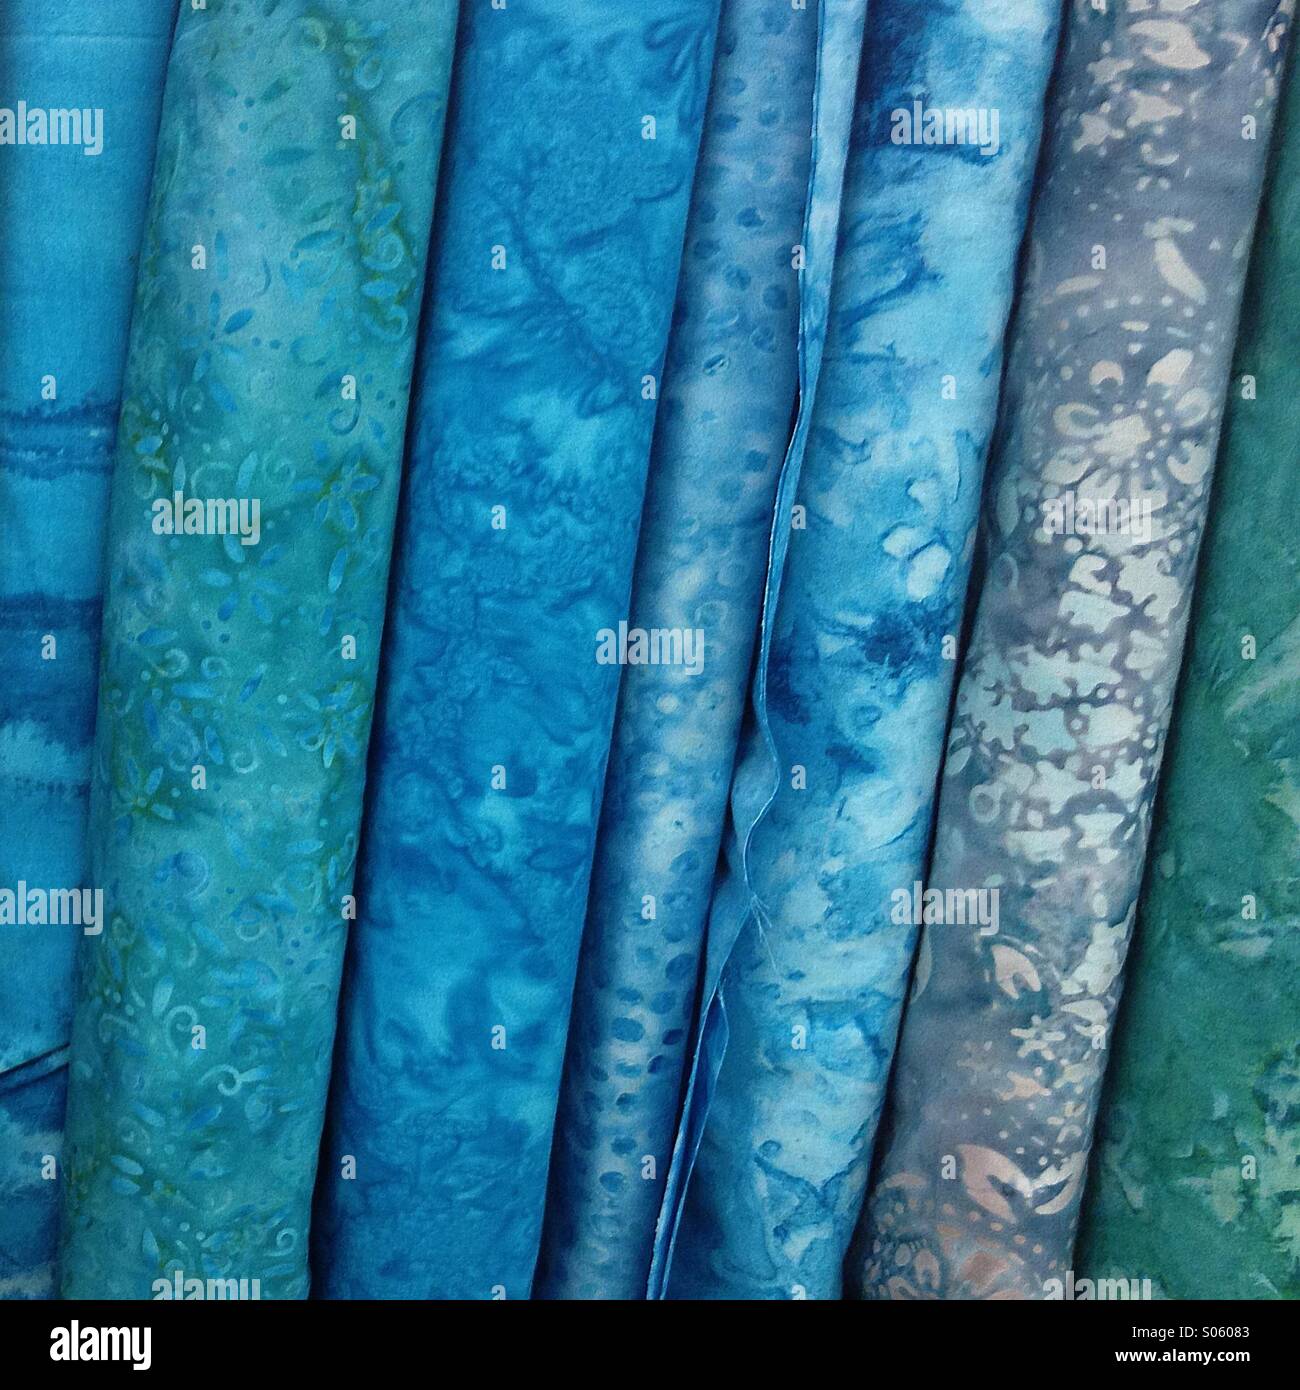 Blue and turquoise batik fabrics (cloth) on bolts Stock Photo